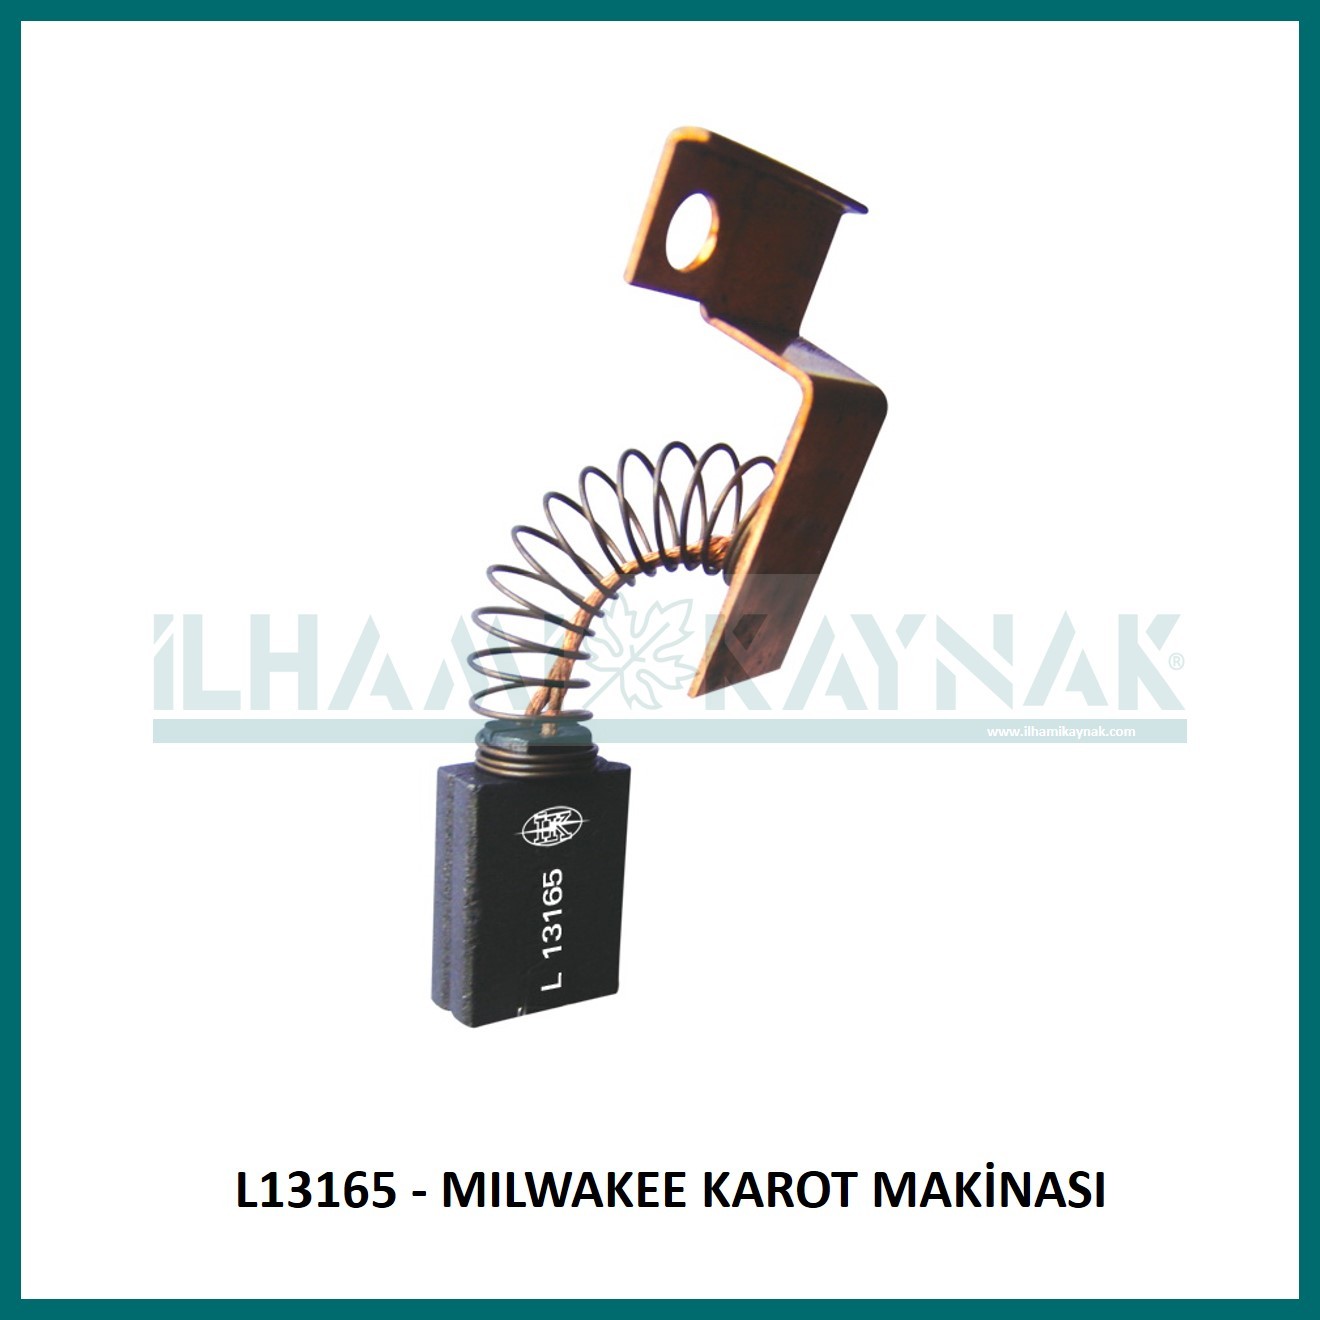 L13165 - MILWAUKEE KAROT MAKİNASI - 2(3.15*14.3*23) mm - Minimum Satın Alım: 10 Adet.